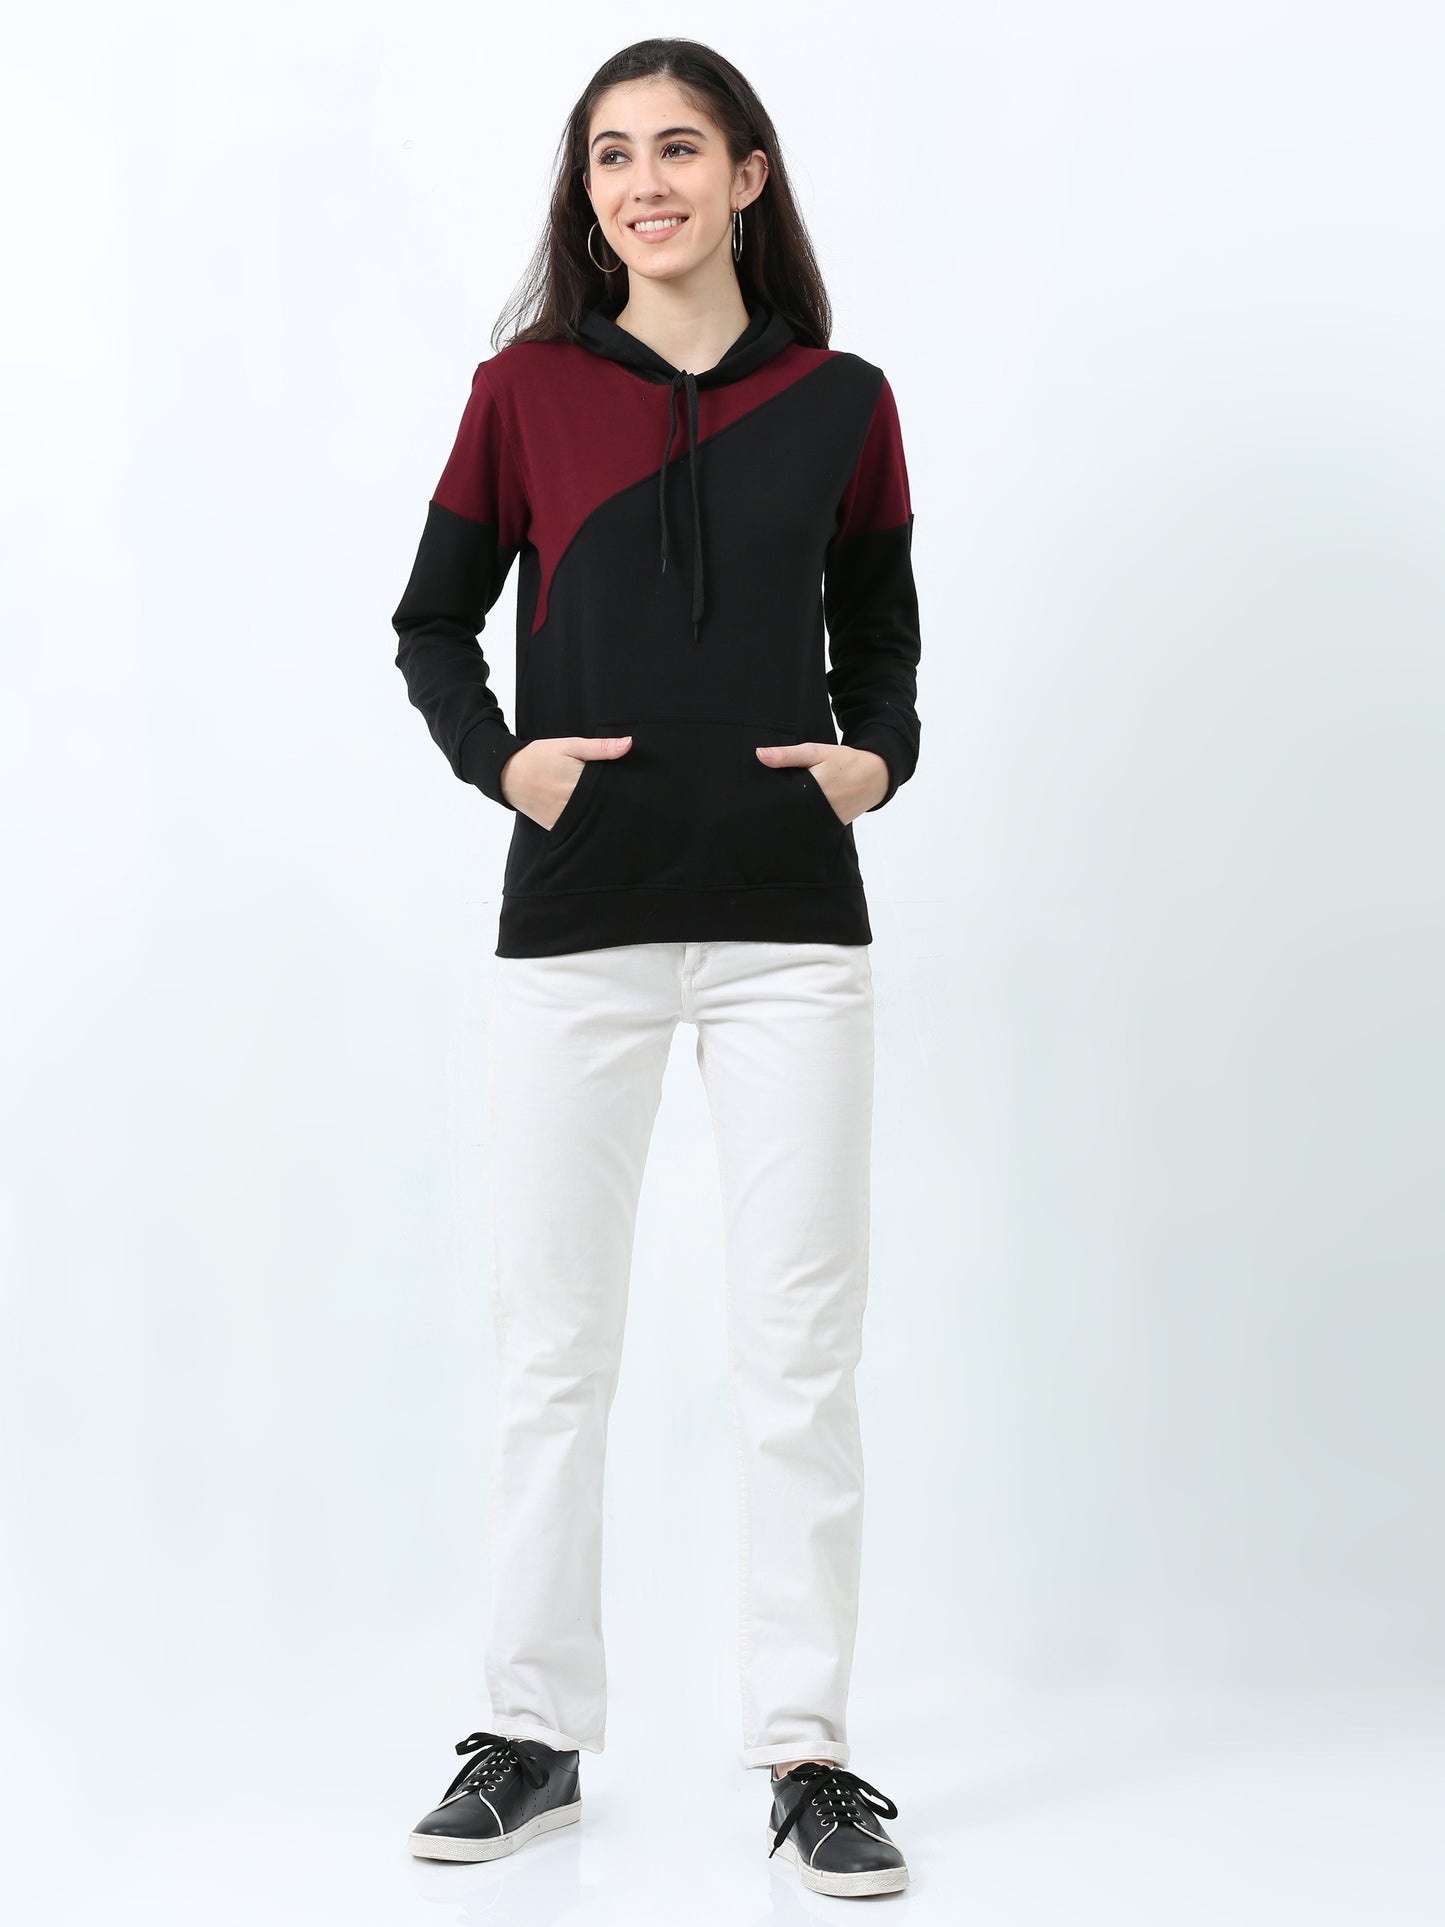 Women's Cotton Color Block Maroonblack Color Sweatshirt Hoodies